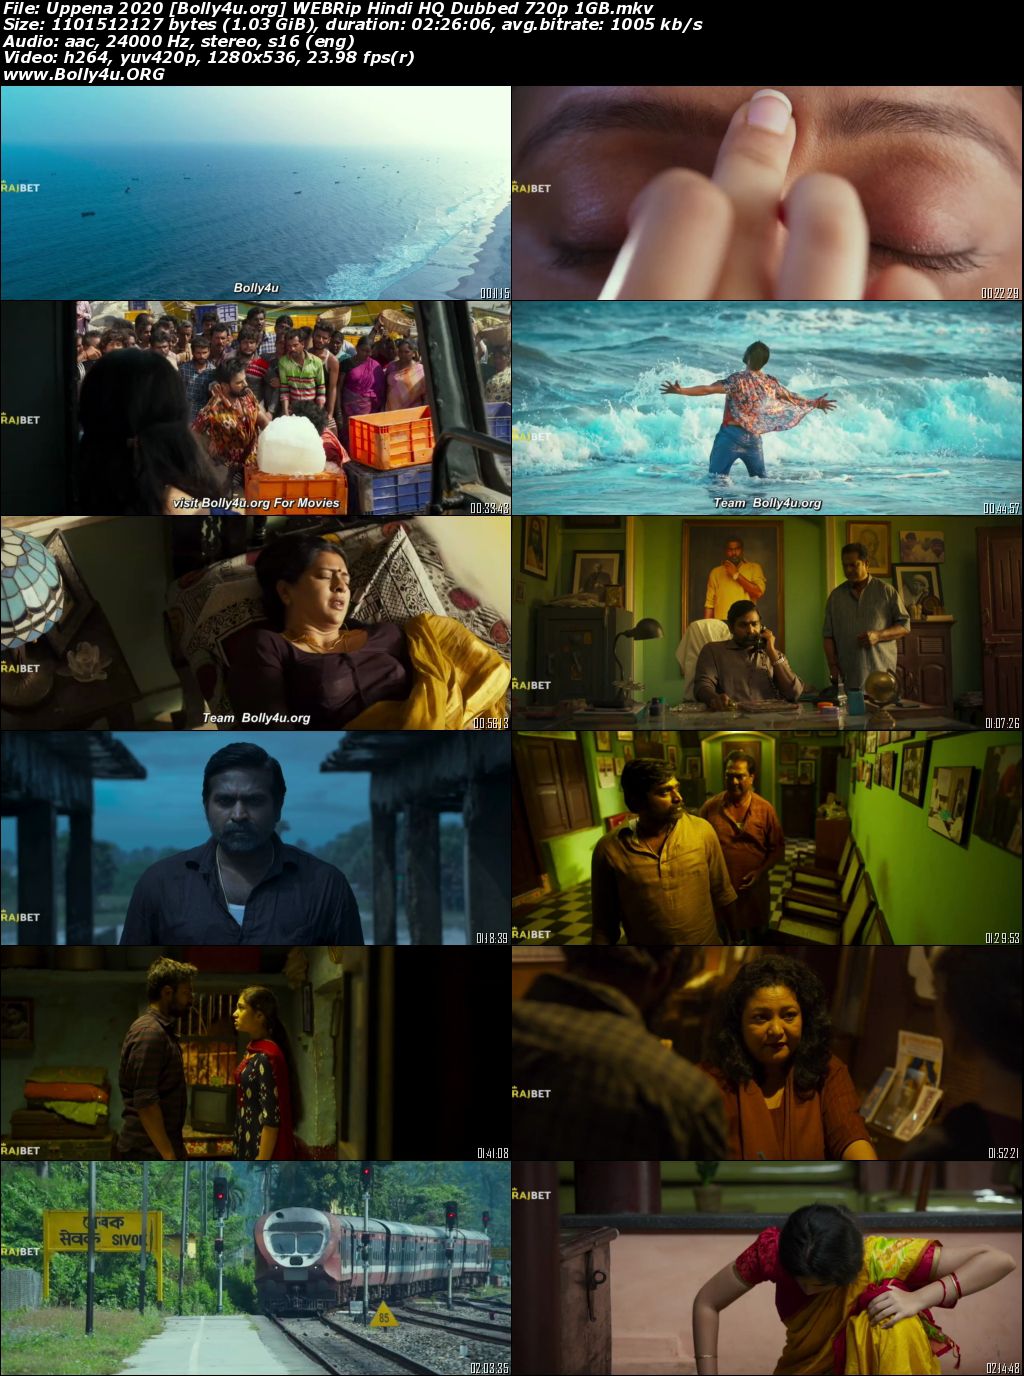 Uppena 2020 WEBRip Hindi HQ Dubbed Full Movie Download 1080p 720p 480p